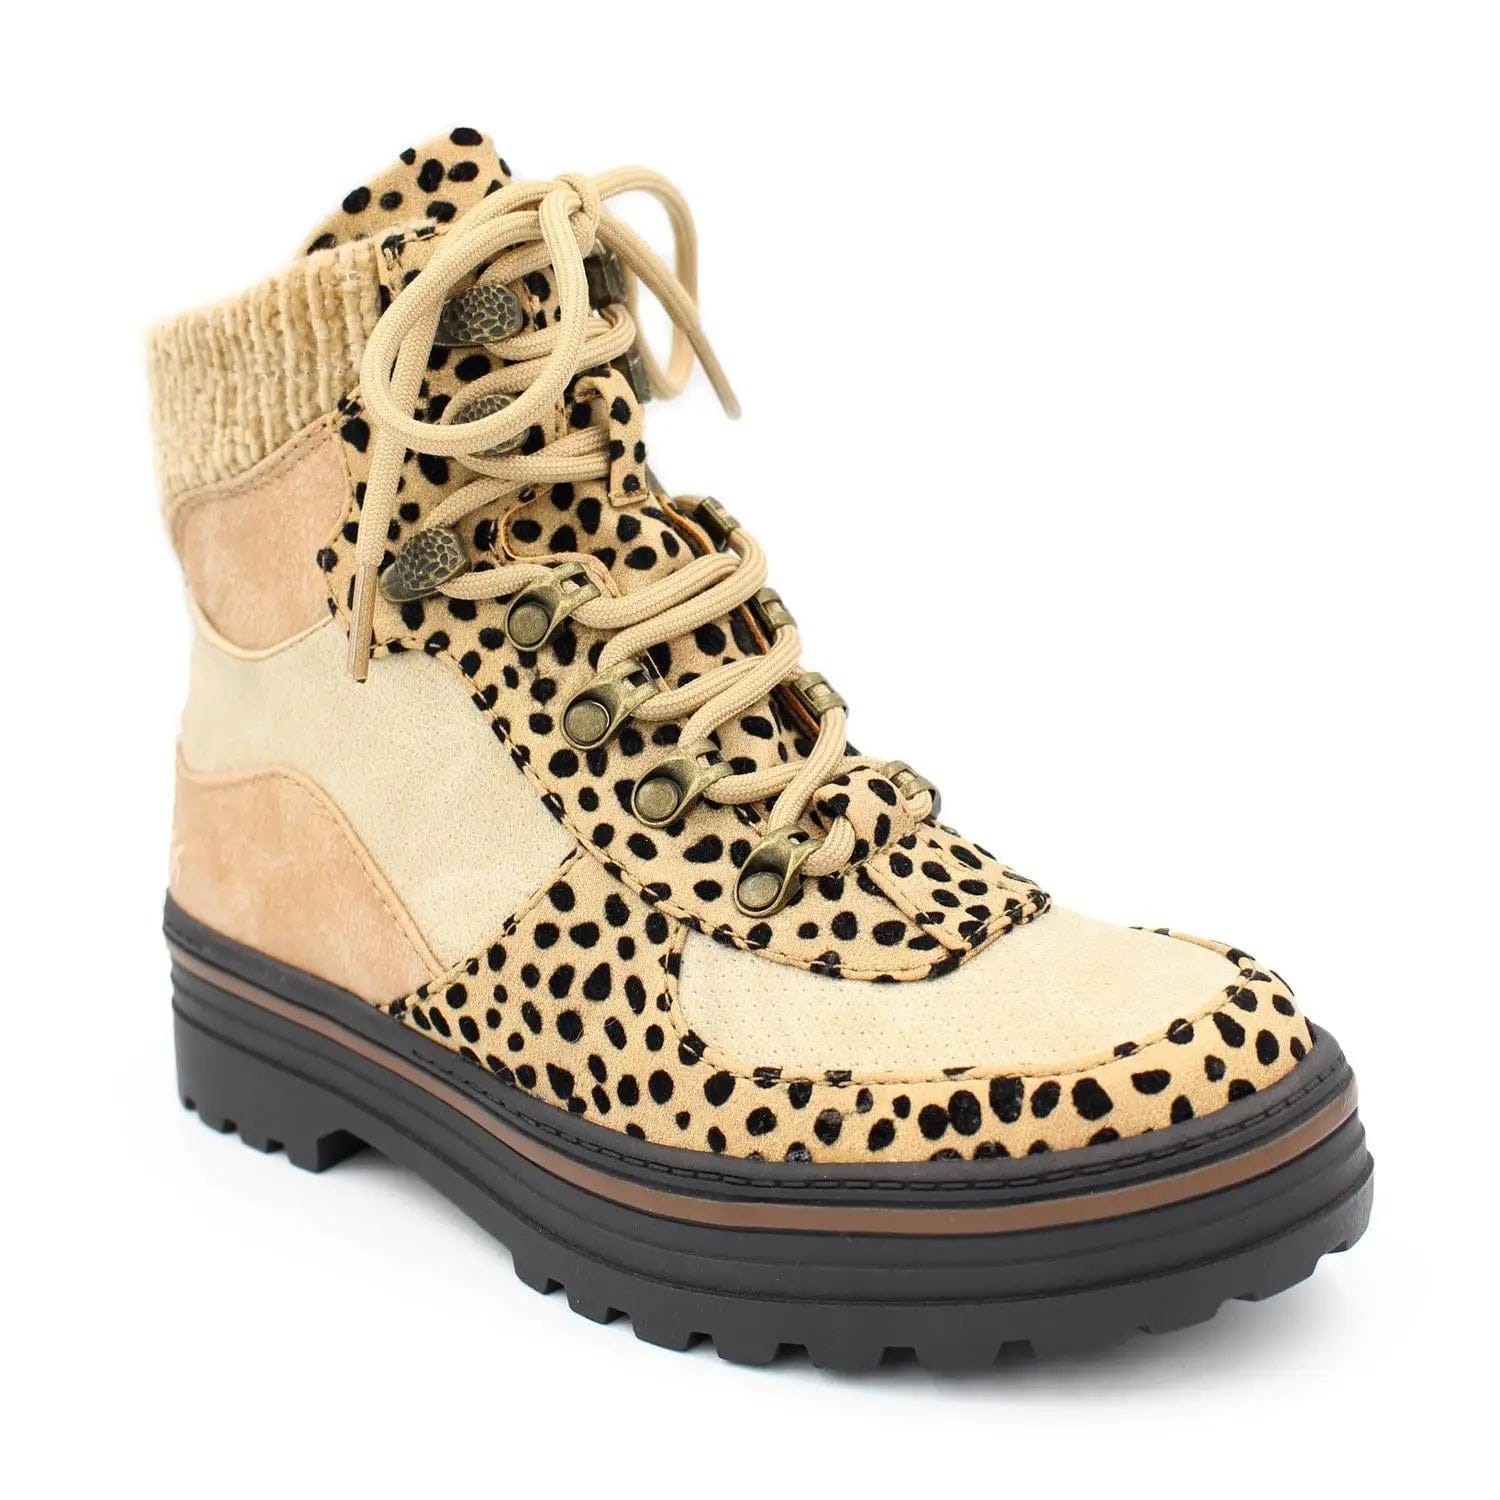 LOVEMI  Boots Leopard print / 4 Lovemi -  Leopard Boots Women Lace Up Martin Boots Winter Low Heel Shoes